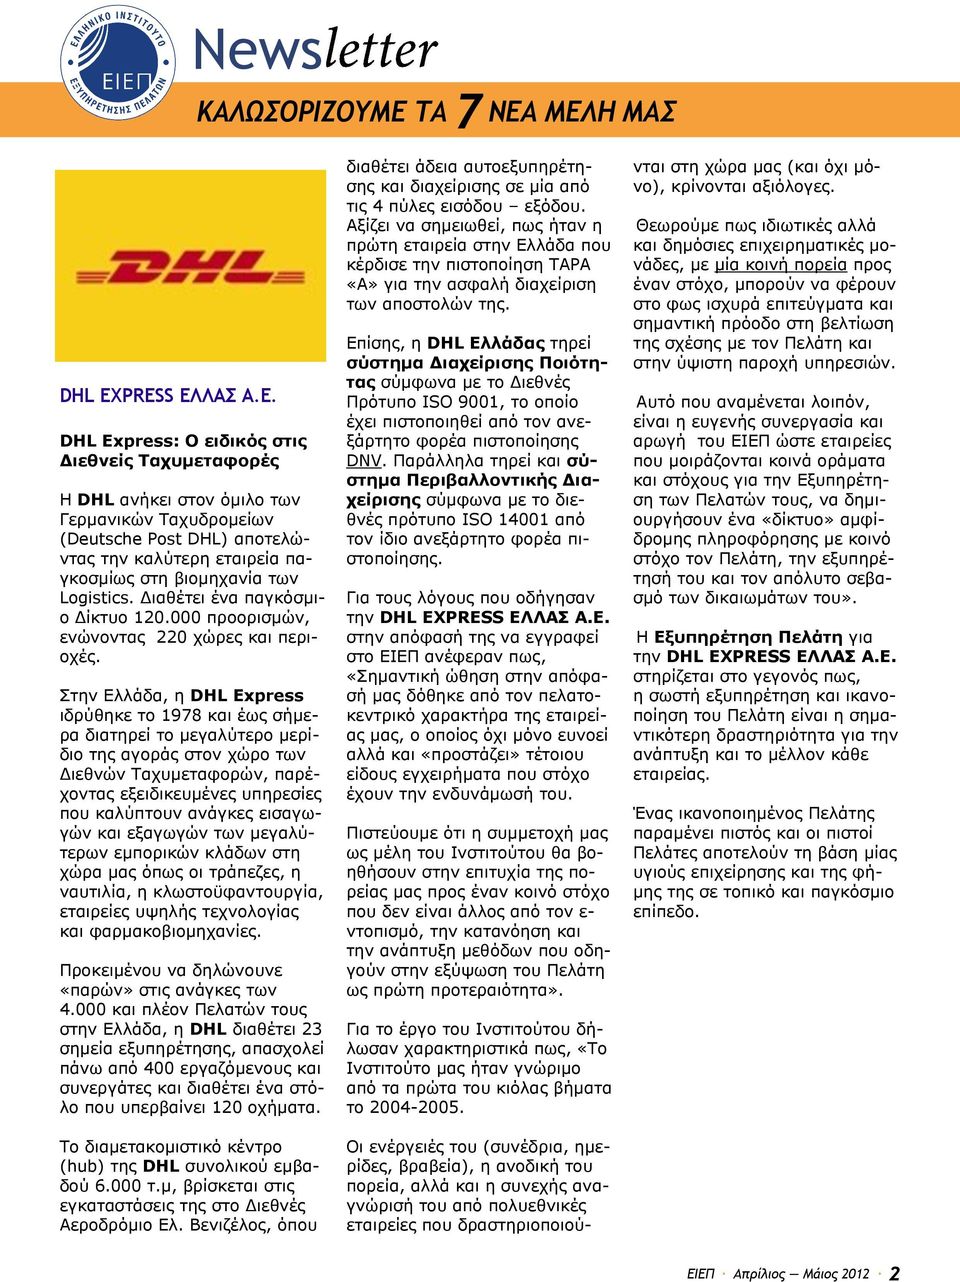 DHL Express: Ο εηδηθόο ζηηο Δηεζλείο Σαρπκεηαθνξέο Ζ DHL αλήθεη ζηνλ φκηιν ησλ Γεξκαληθψλ Ταρπδξνκείσλ (Deutsche Post DHL) απνηειψληαο ηελ θαιχηεξε εηαηξεία παγθνζκίσο ζηε βηνκεραλία ησλ Logistics.